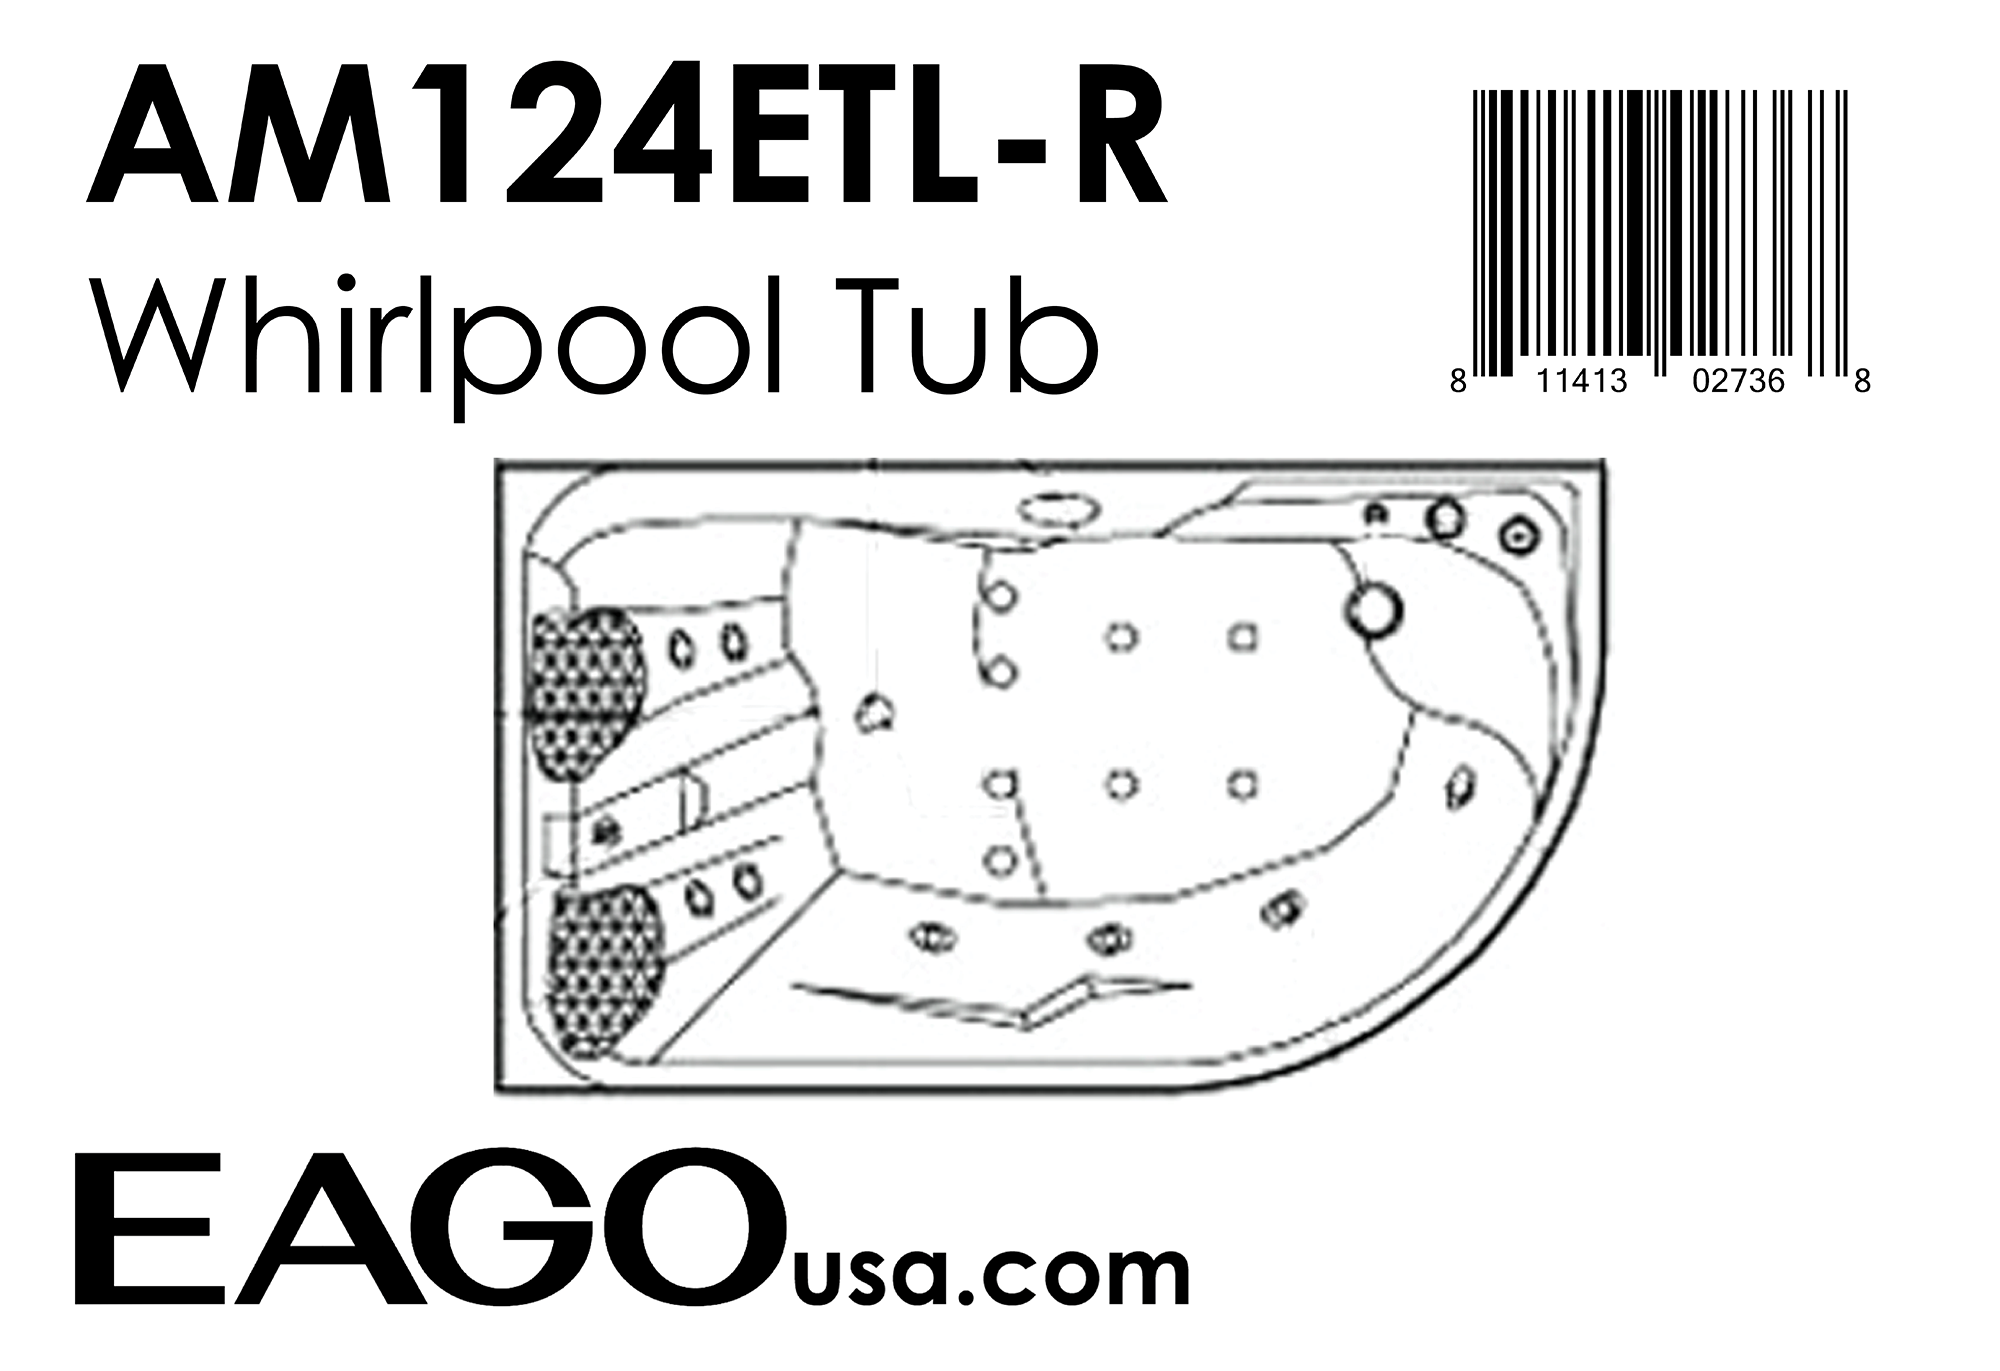 EAGO - 6 ft Right Corner Acrylic White Whirlpool Bathtub for Two | AM124ETL-R